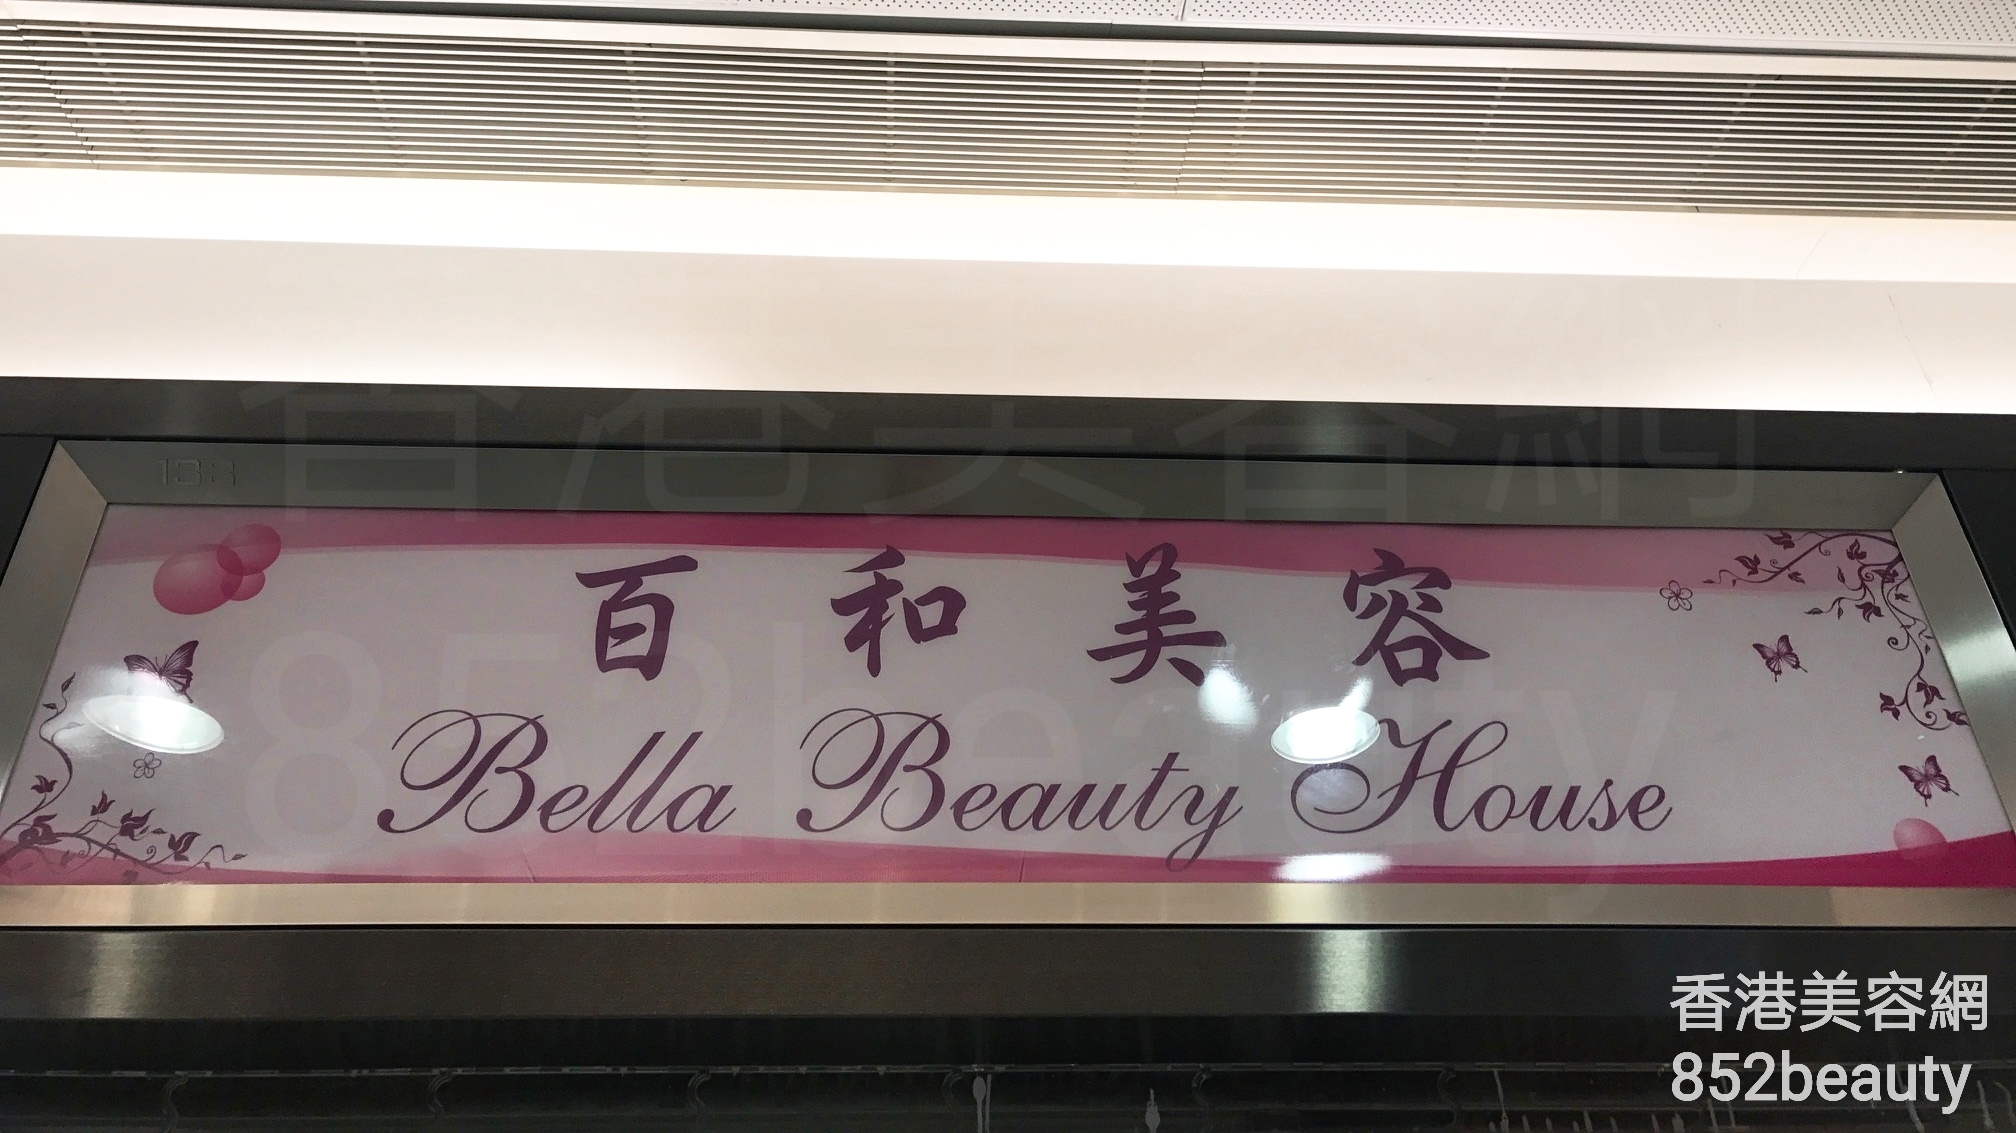 Facial Care: 百和美容 Bella Beauty House